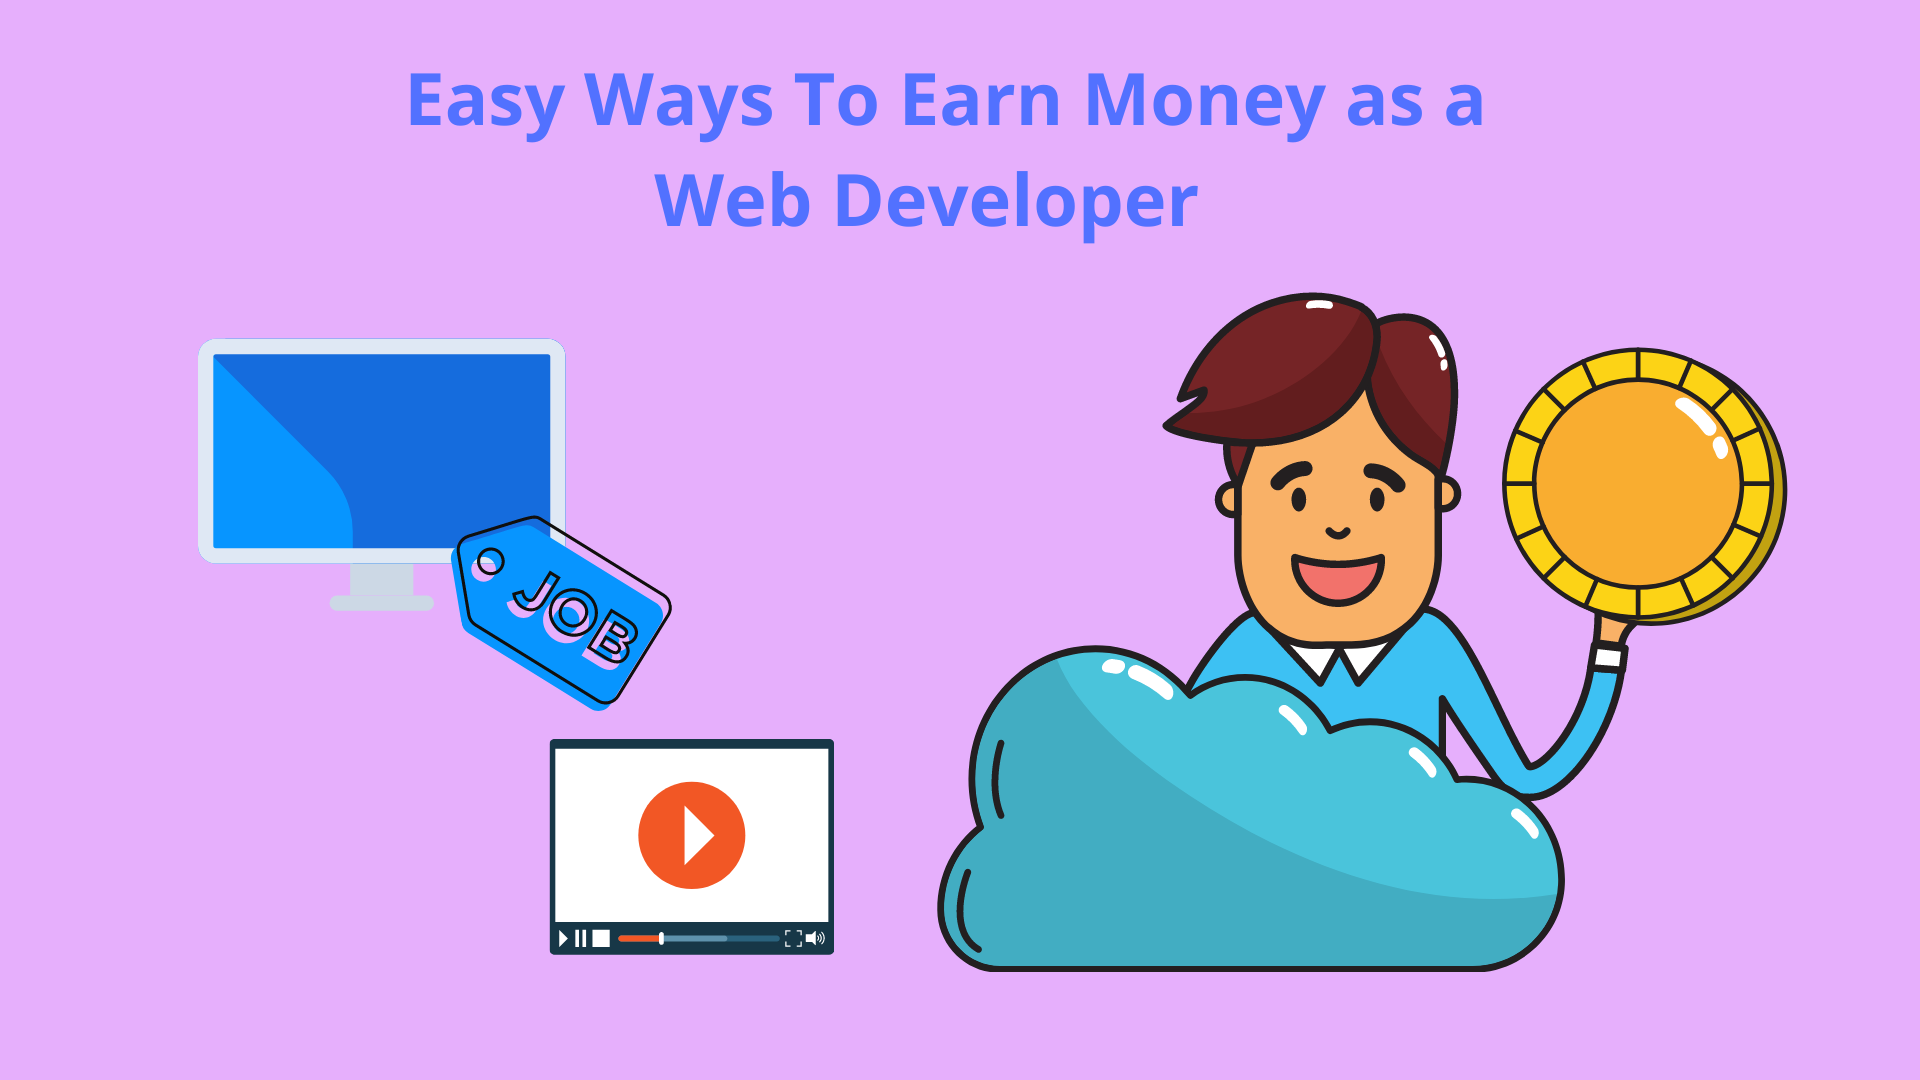 Easy ways for a web developer to make money - GWiz Academy